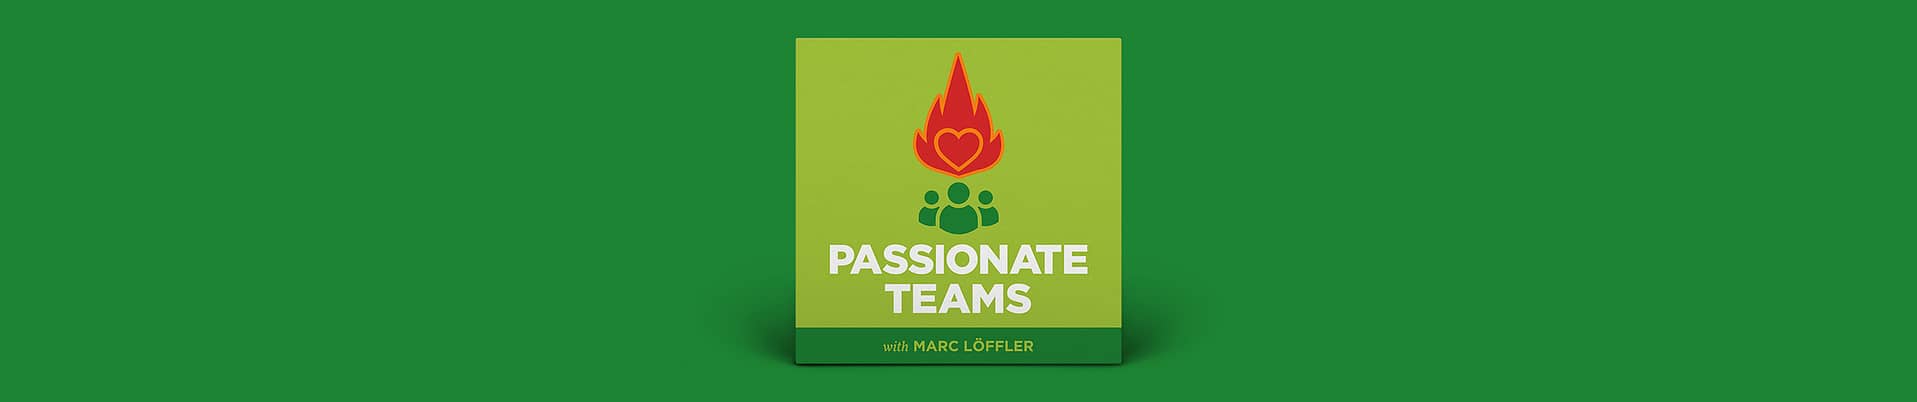 Grüner Banner mit Passionate Teams Logo